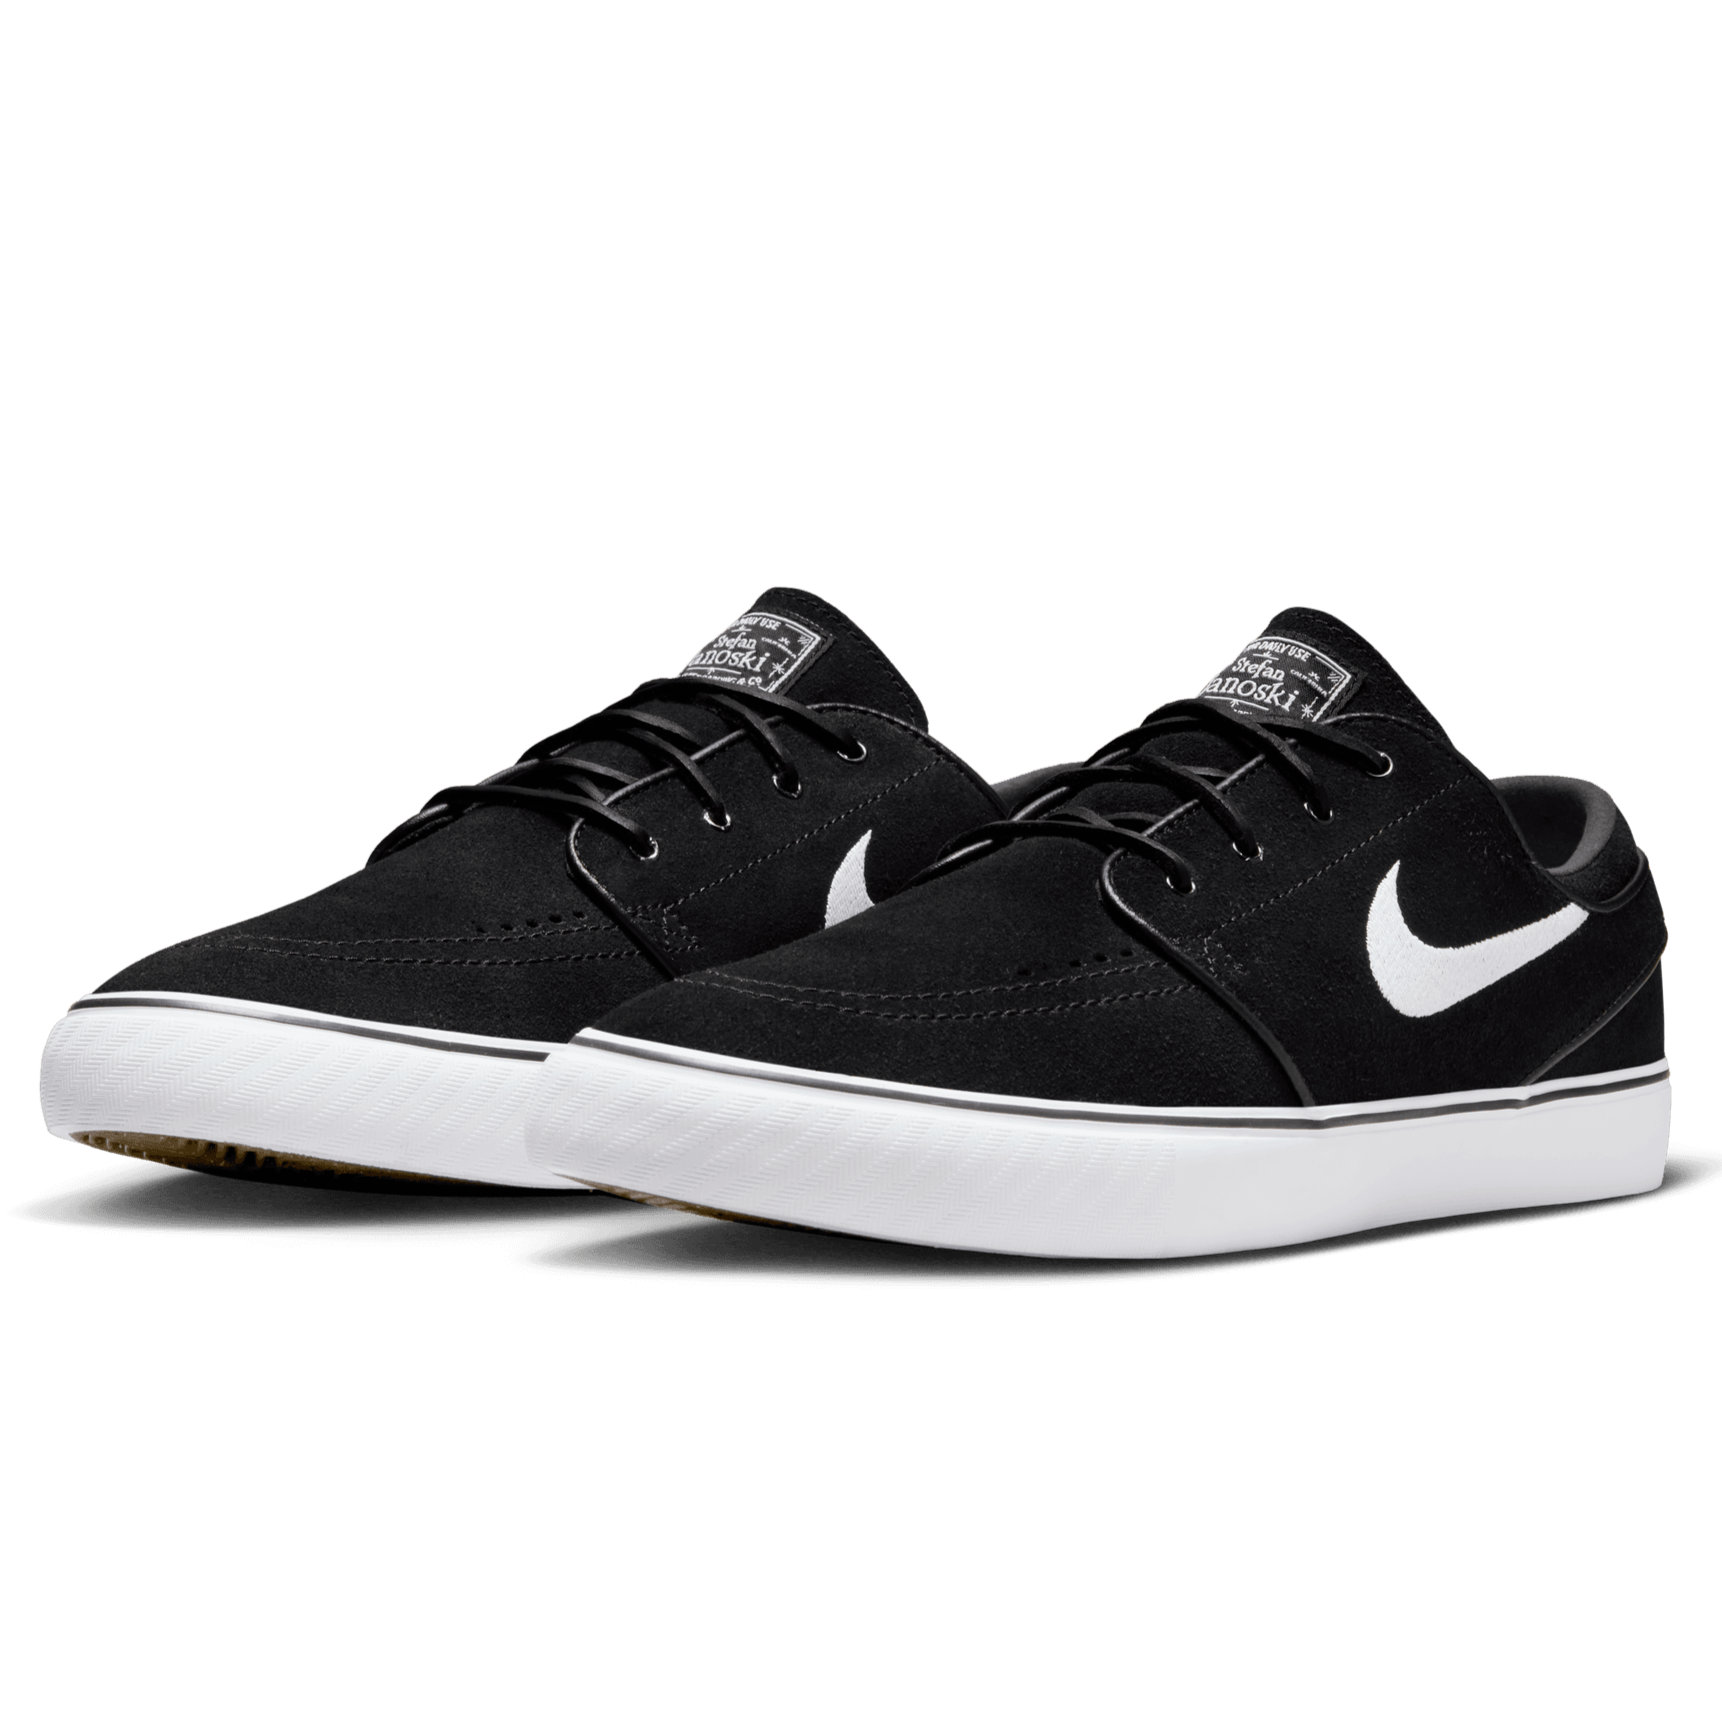 Black/White Janoski OG+ Nike SB Skate Shoe Front